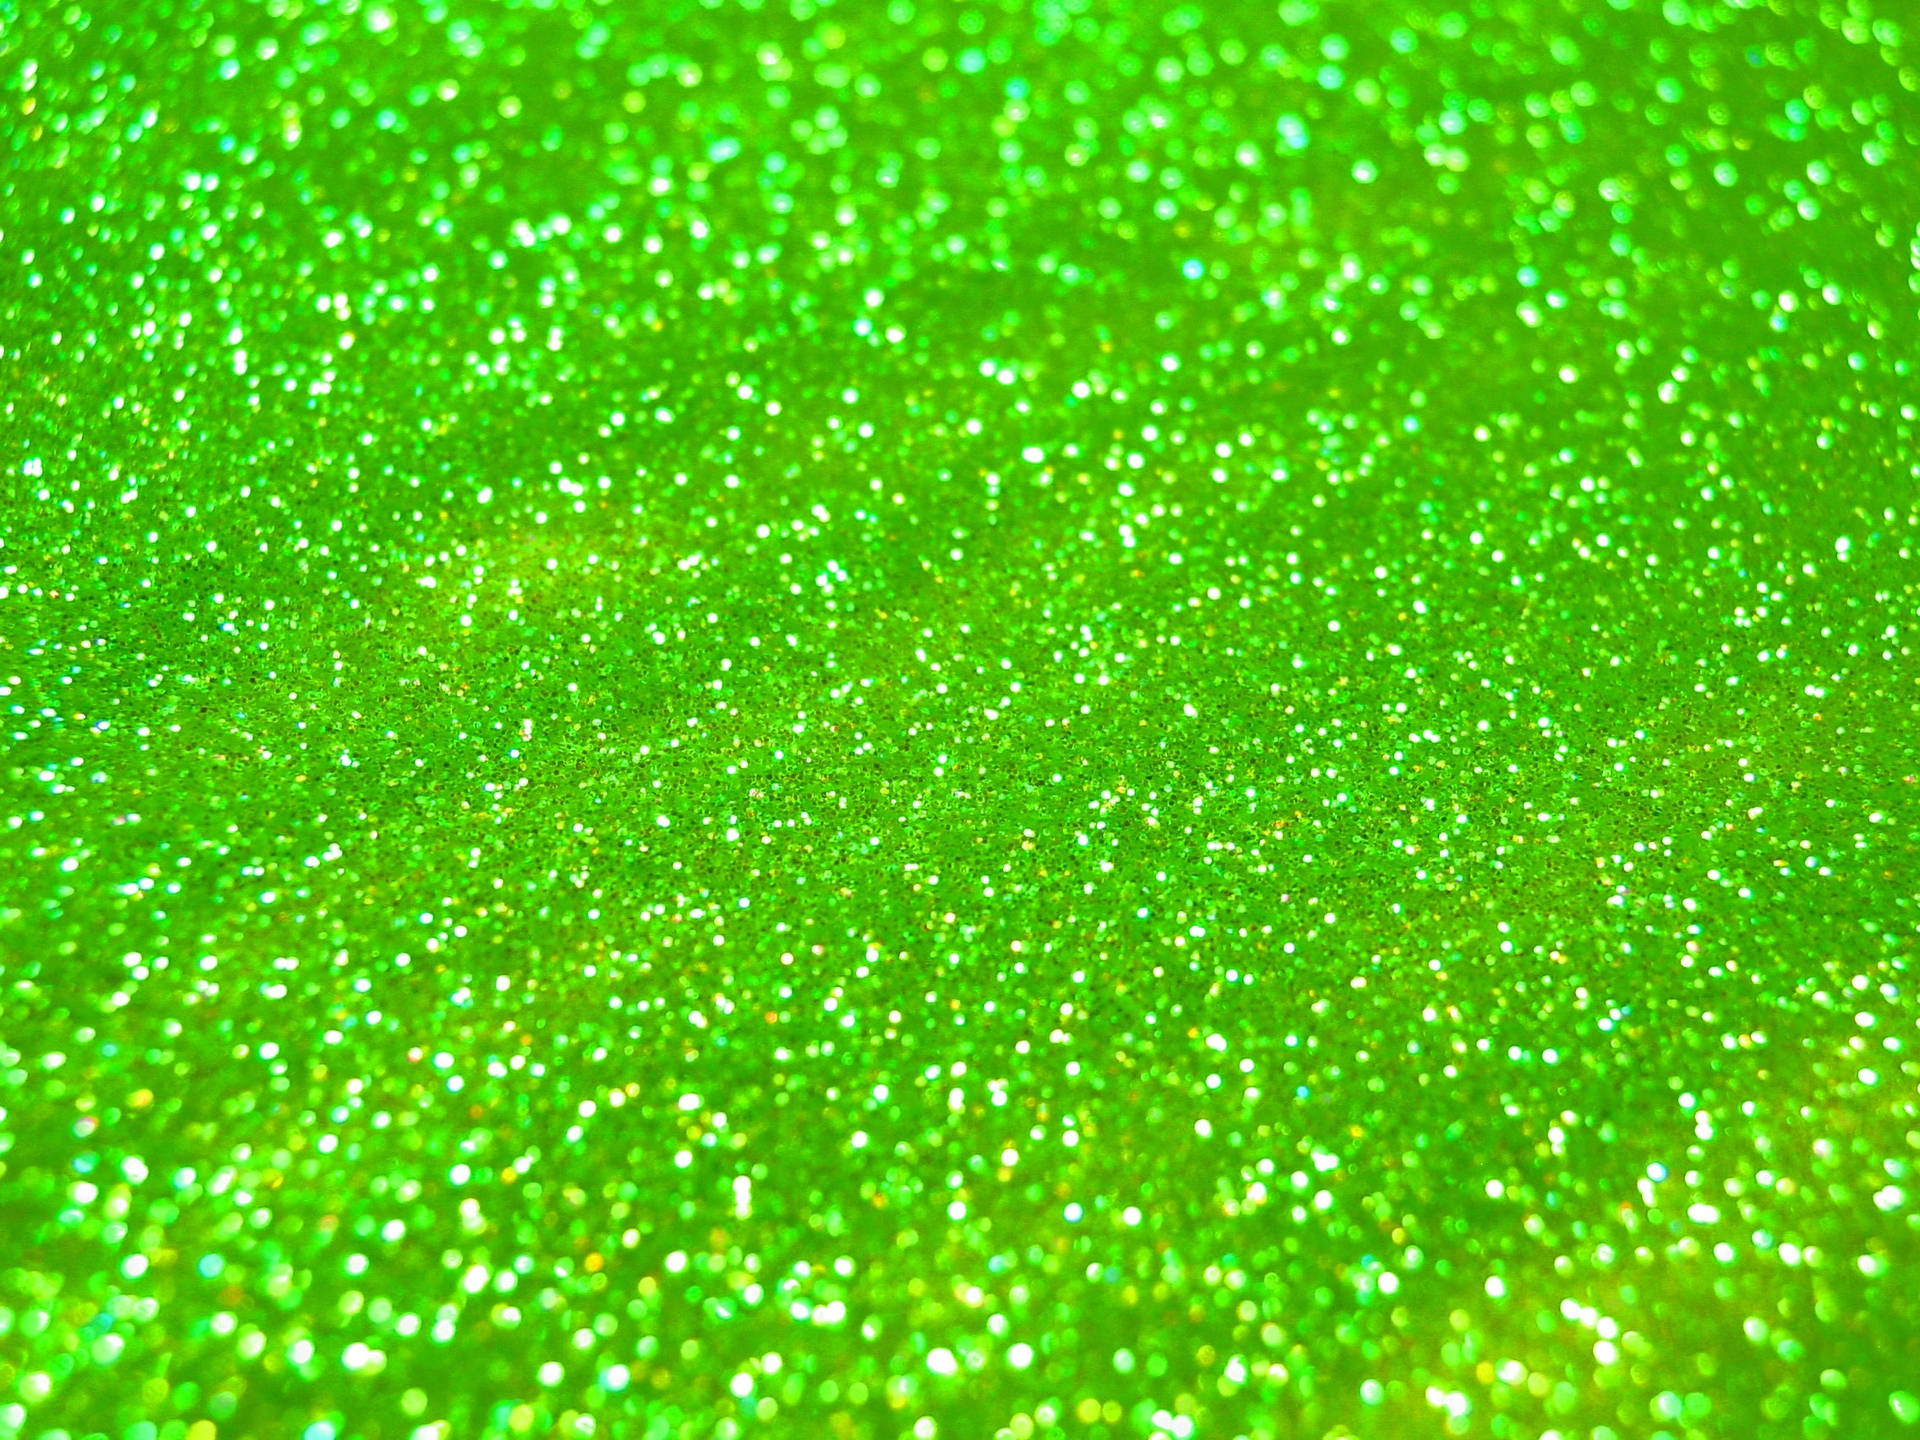 Green Glitter 2272 X 1704 Wallpaper